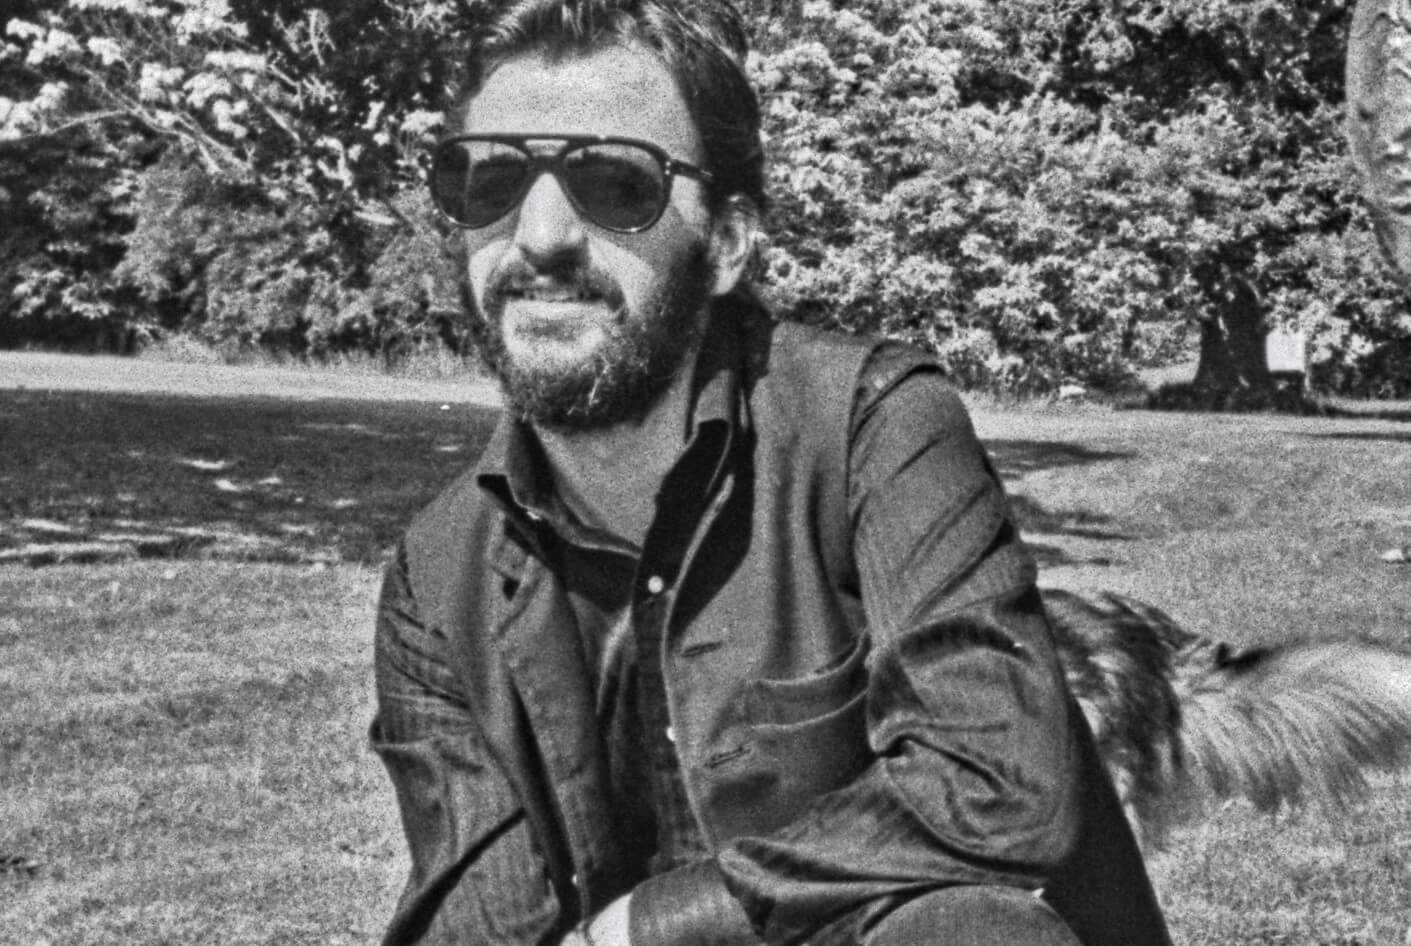 Ringo Starr in black-and-white